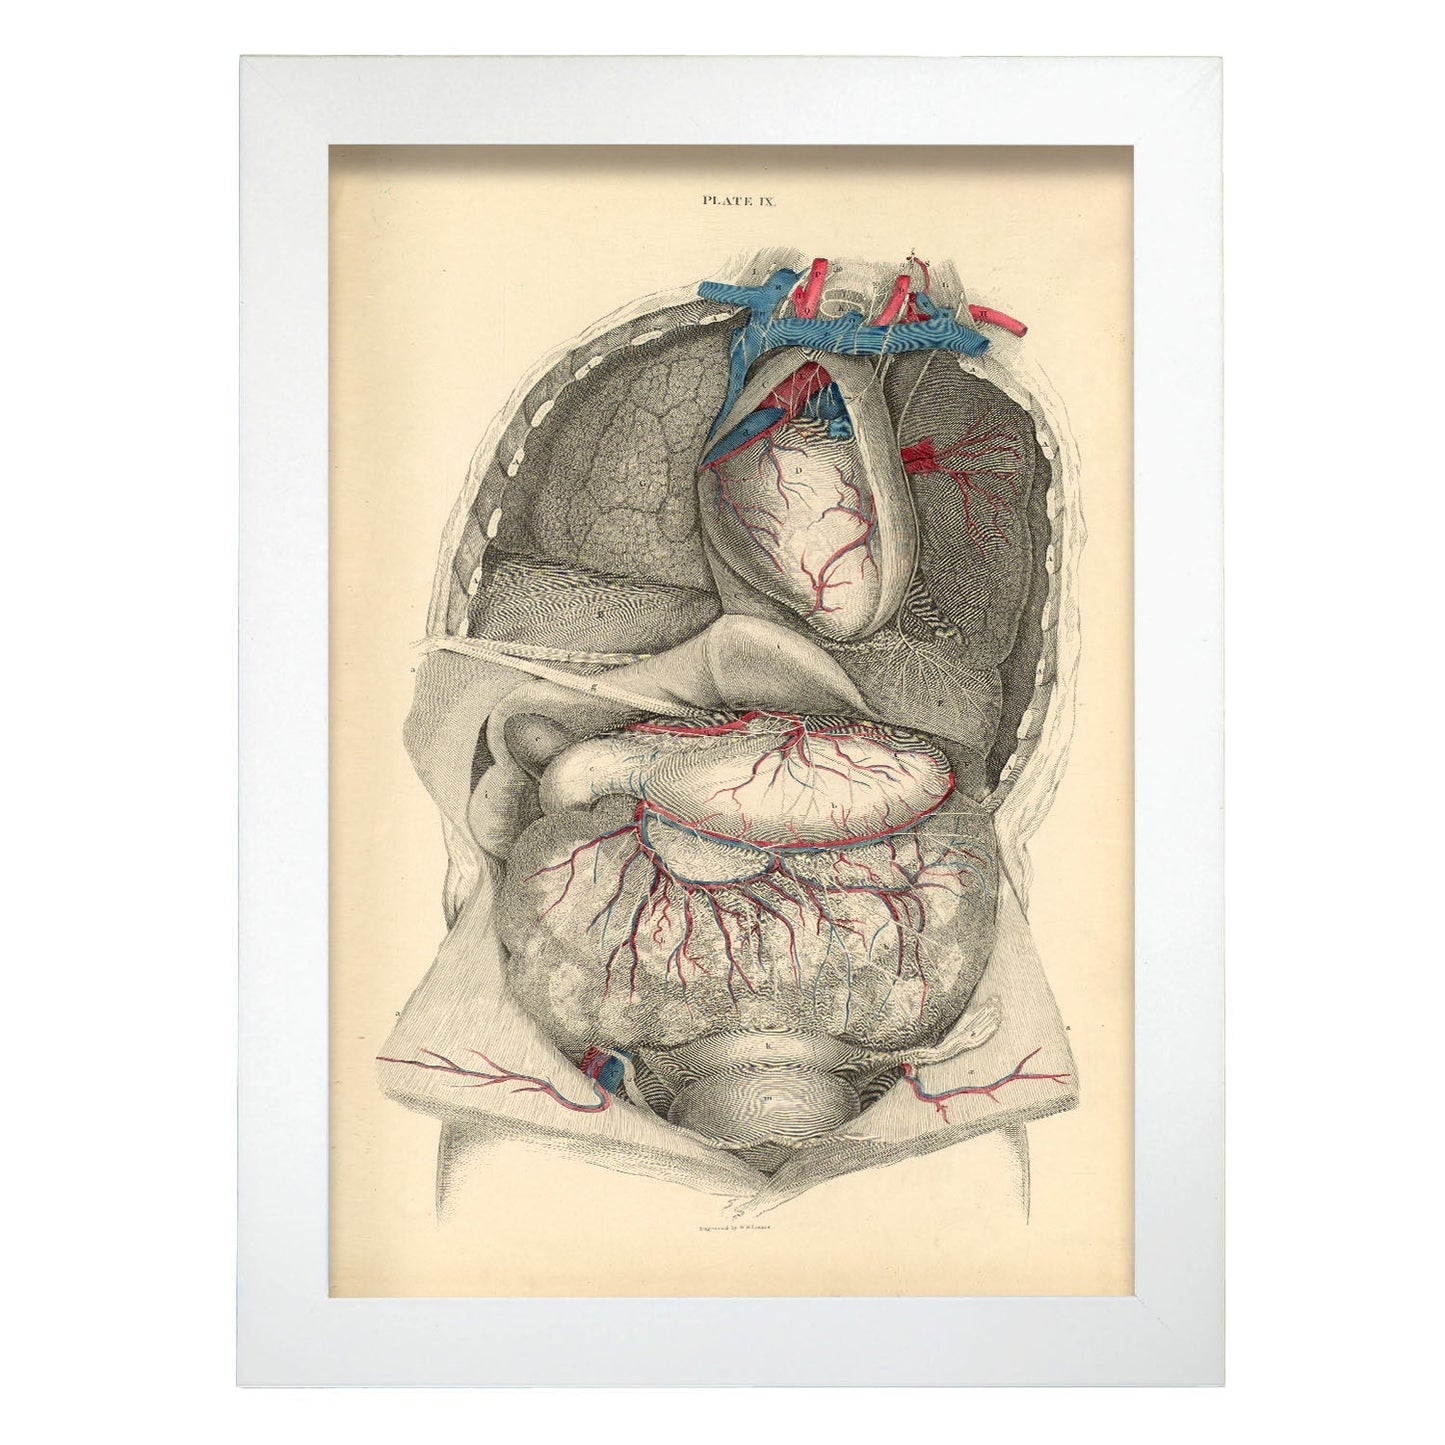 Dissection of the thorax and abdomen-Artwork-Nacnic-A4-Marco Blanco-Nacnic Estudio SL